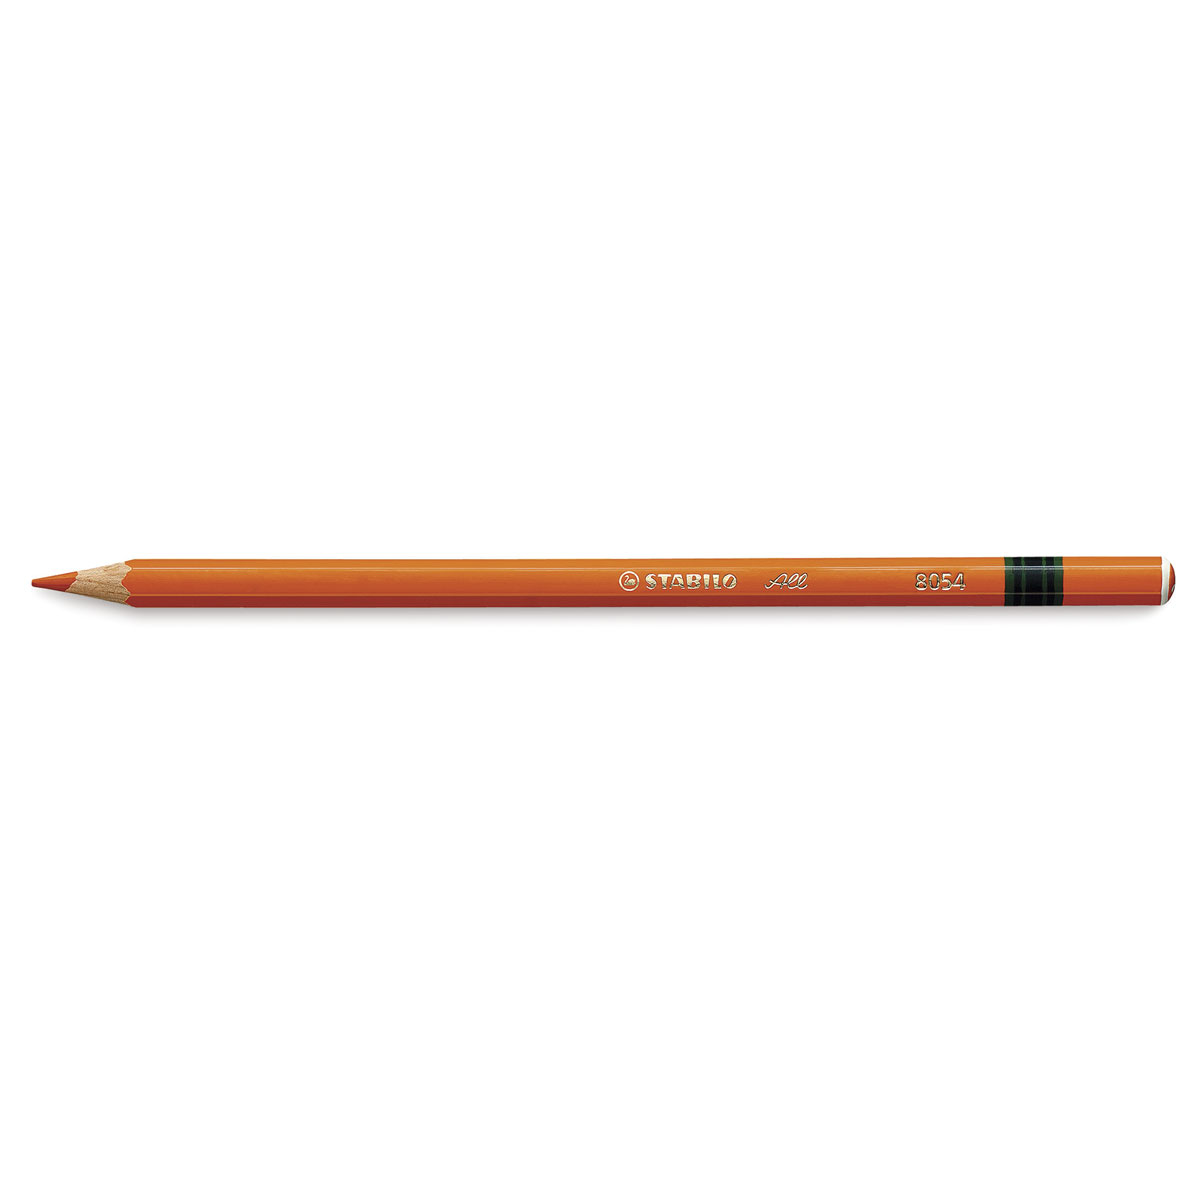 All-Stabilo Drawing Pencils – Black